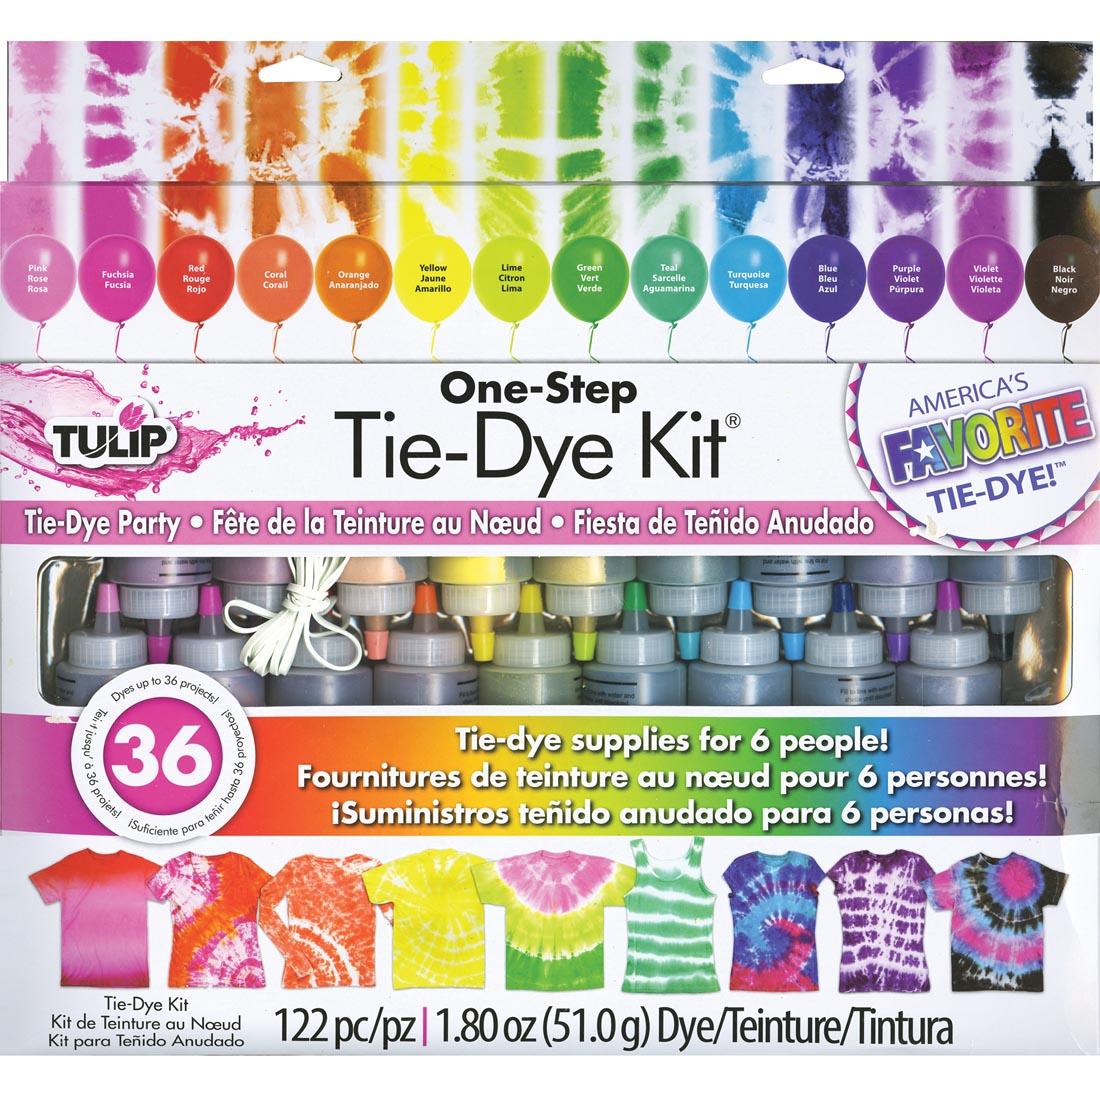 Tulip One-Step Tie-Dye Party Kit